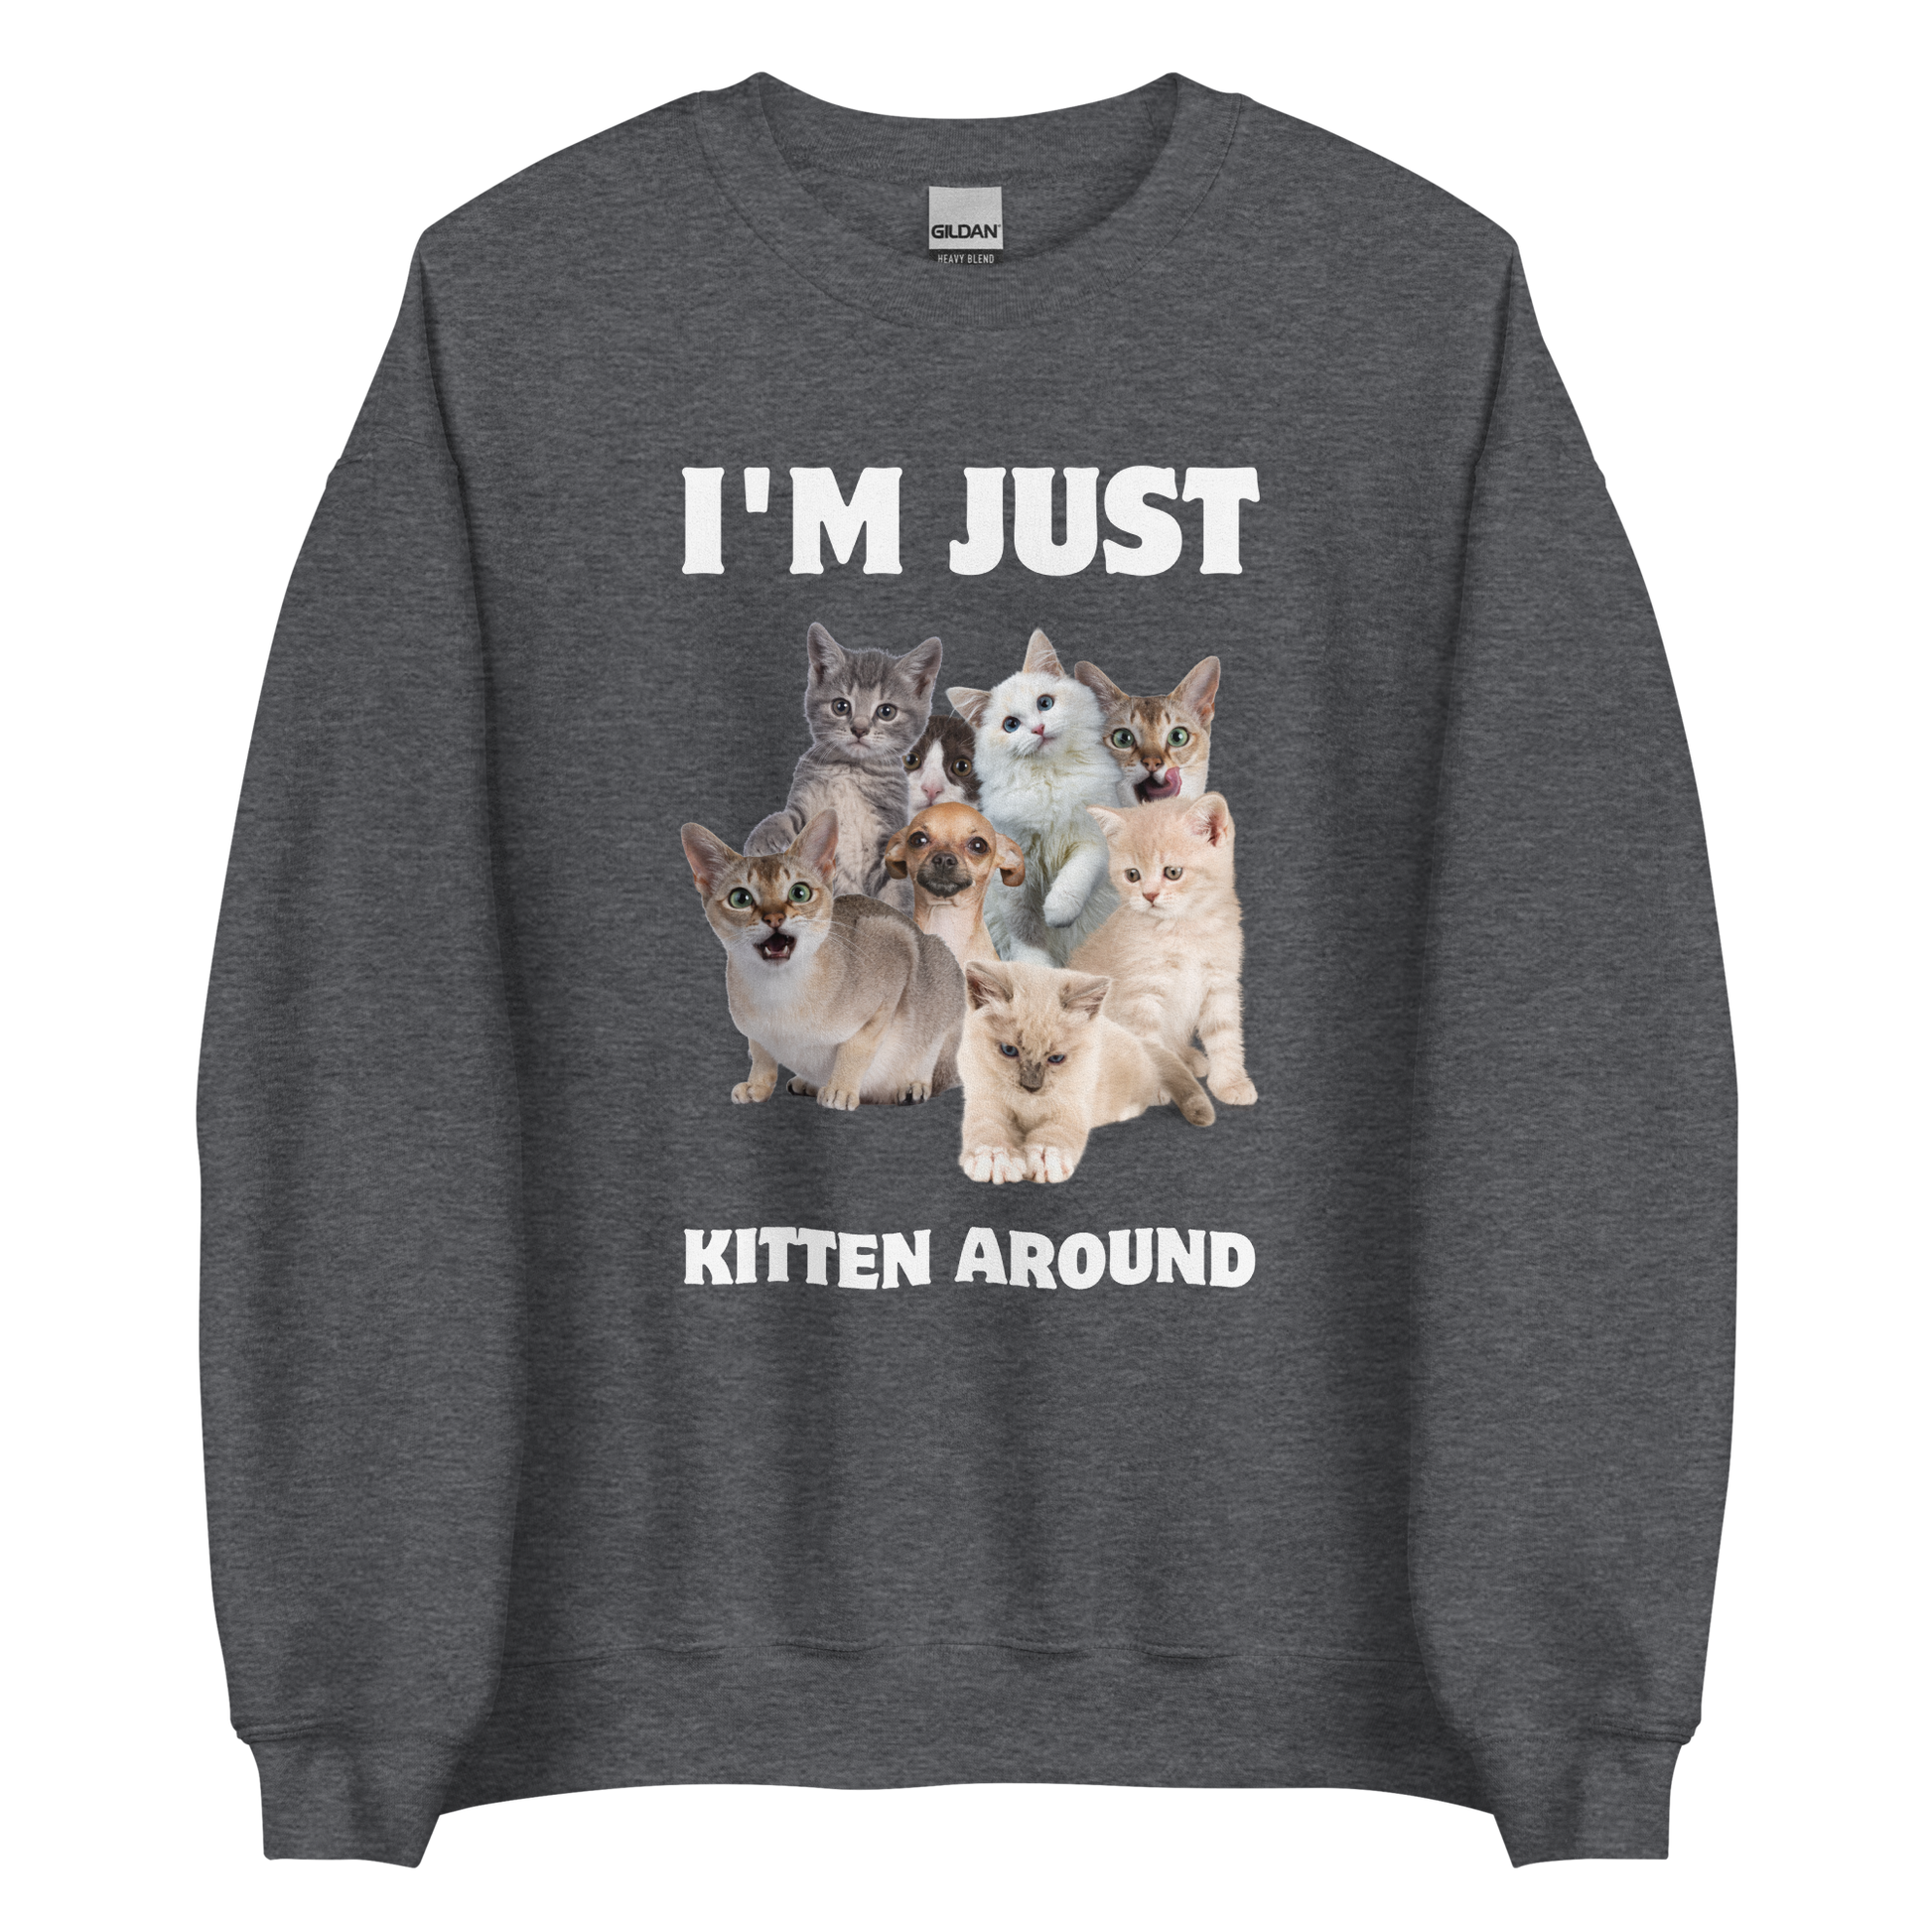 Dark Heather Cat Sweatshirt featuring an I'm Just Kitten Around graphic on the chest - Funny Graphic Cat Sweatshirts - Boozy Fox